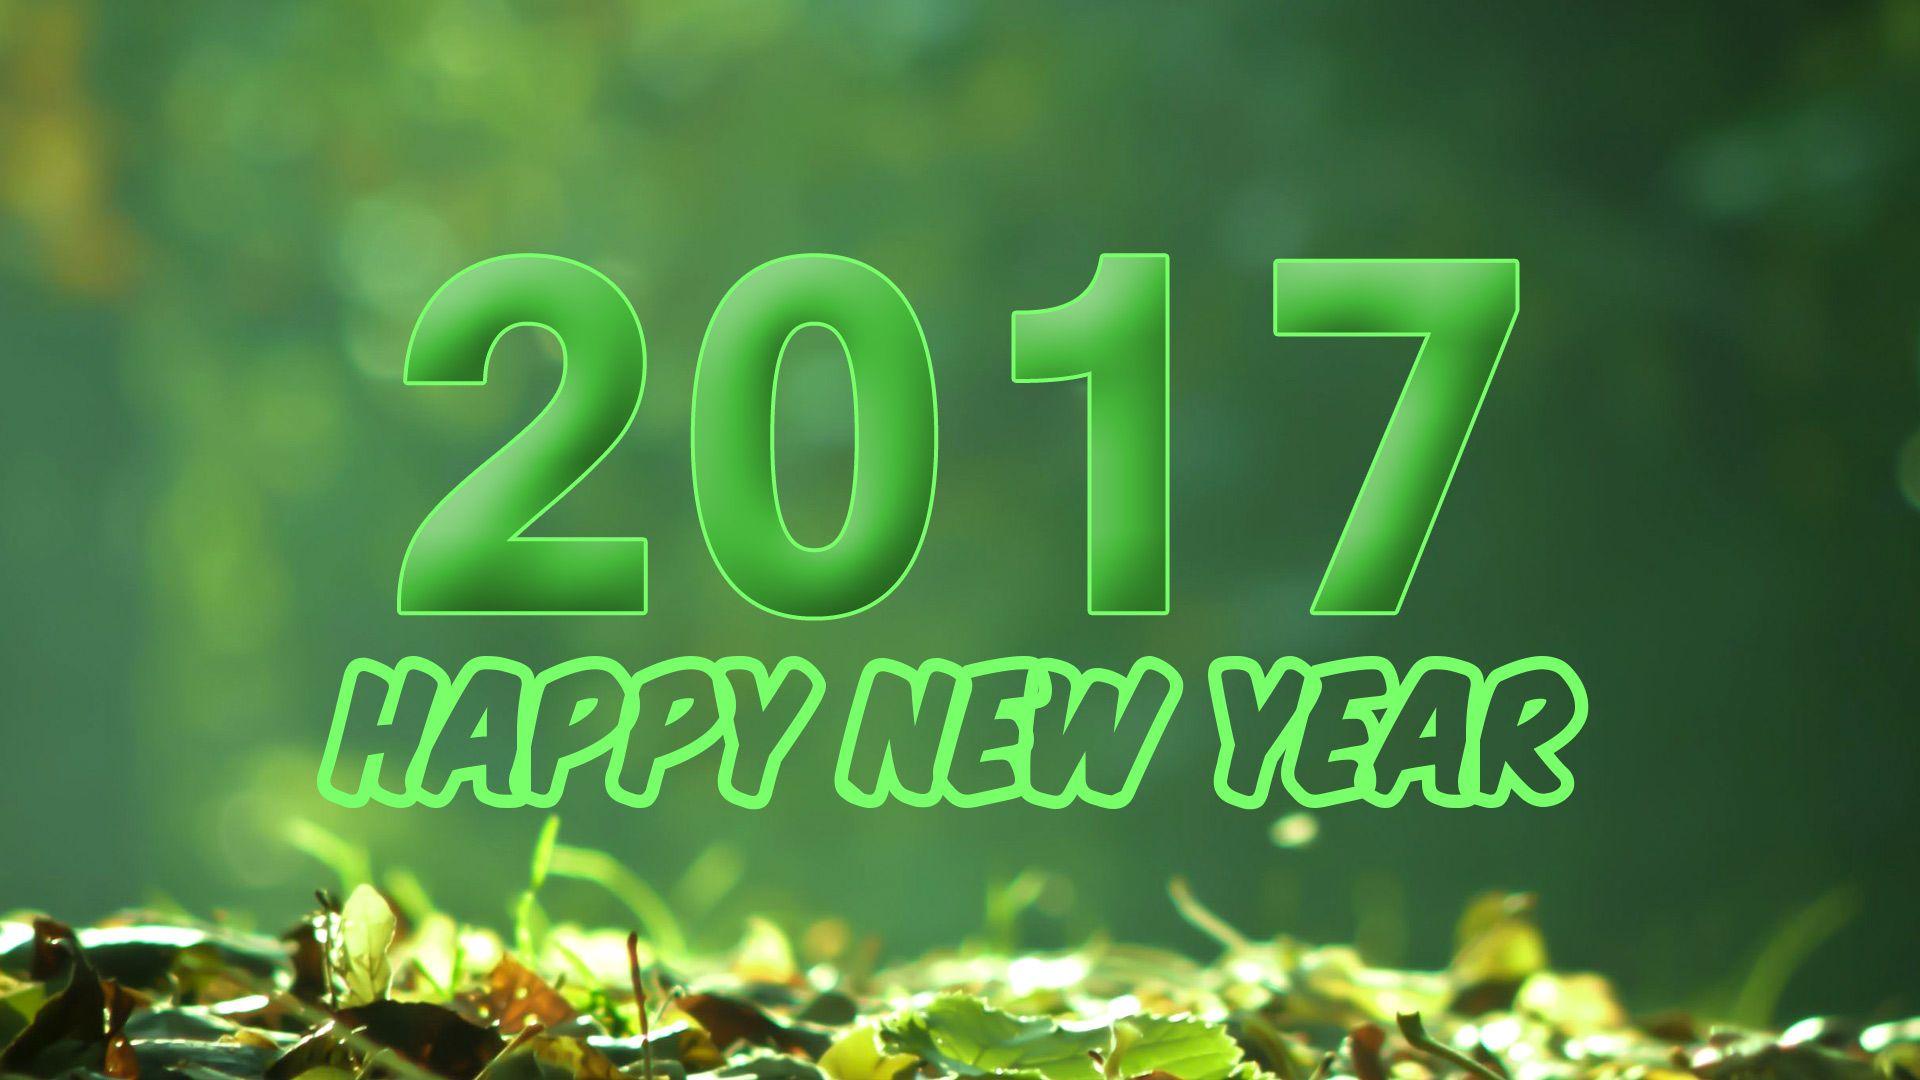 Happy New Year 2017 HD wallpaper pics free download